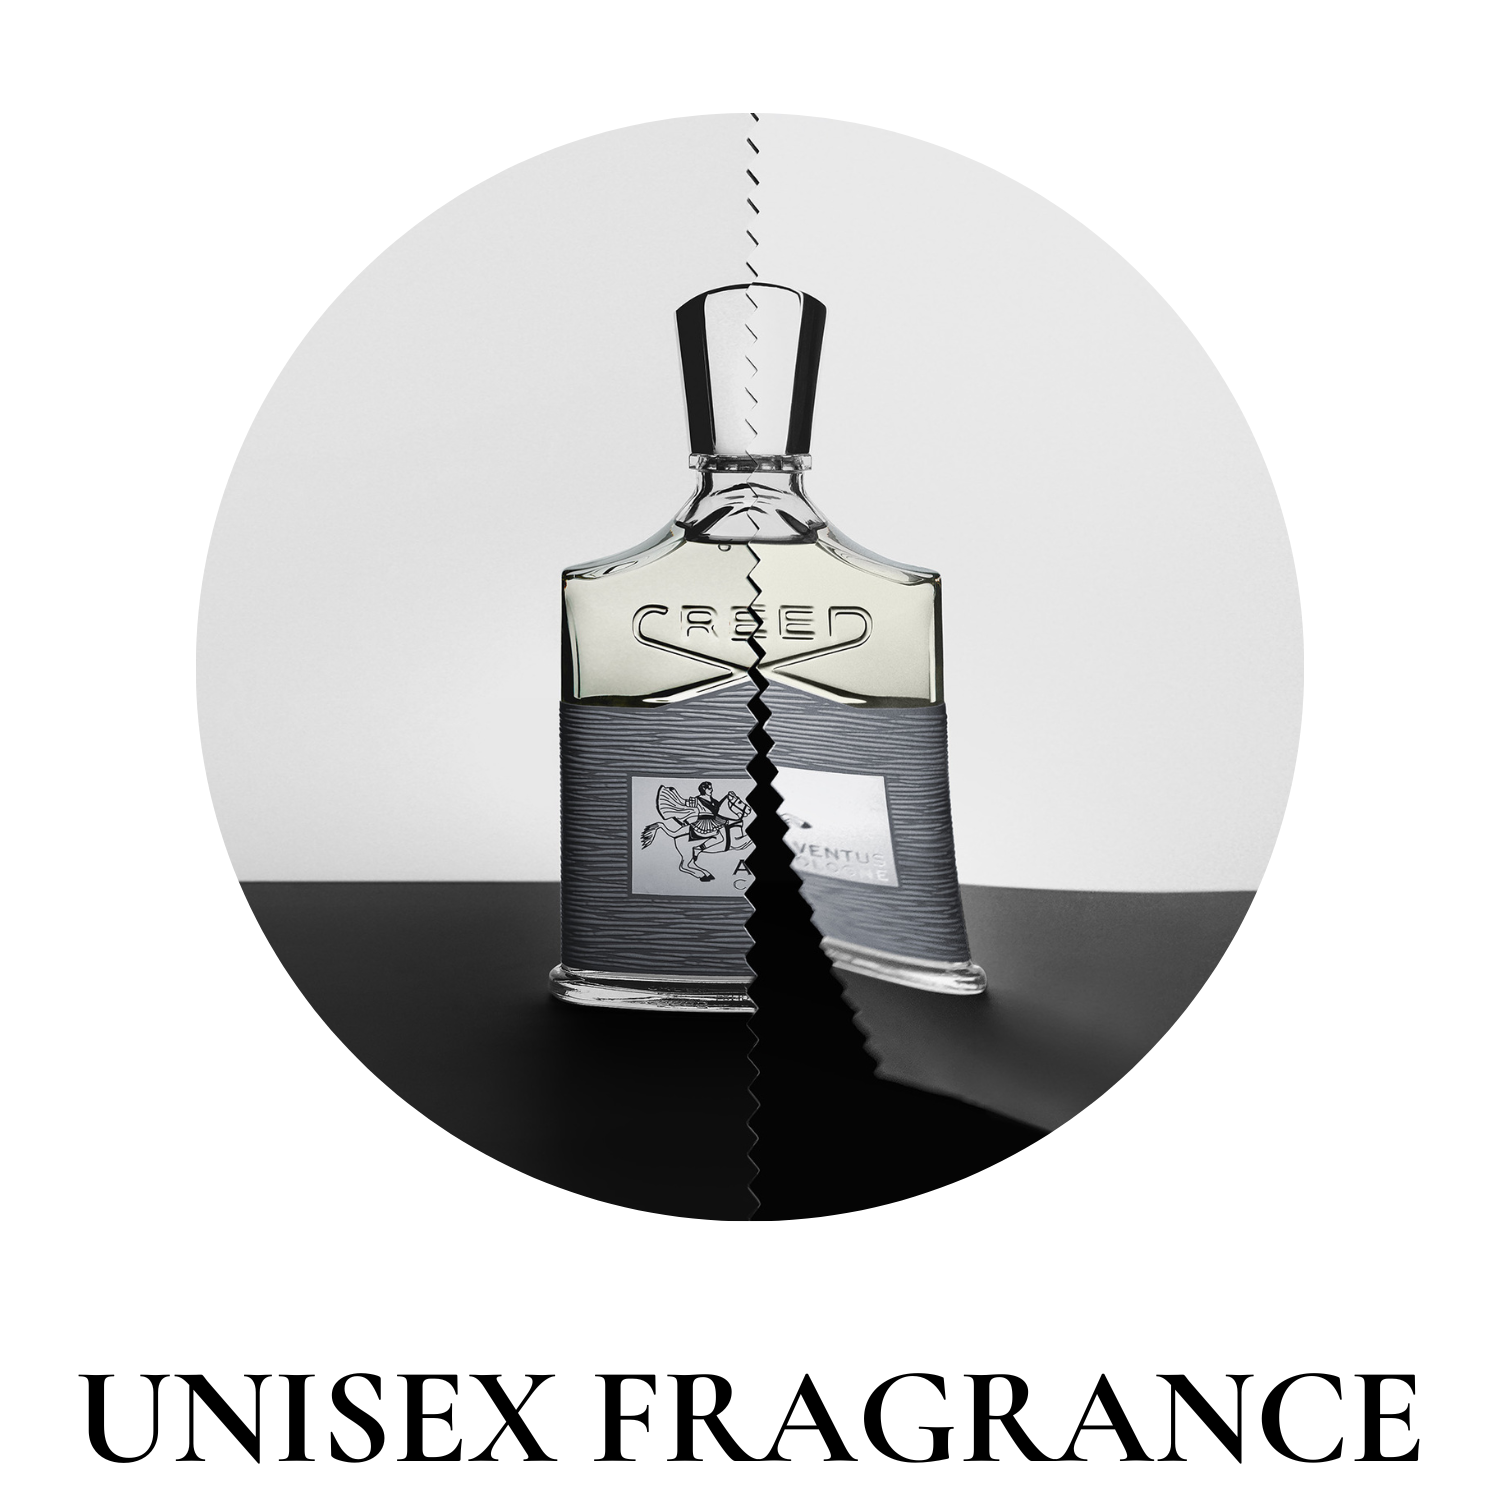 Universal Fragrance